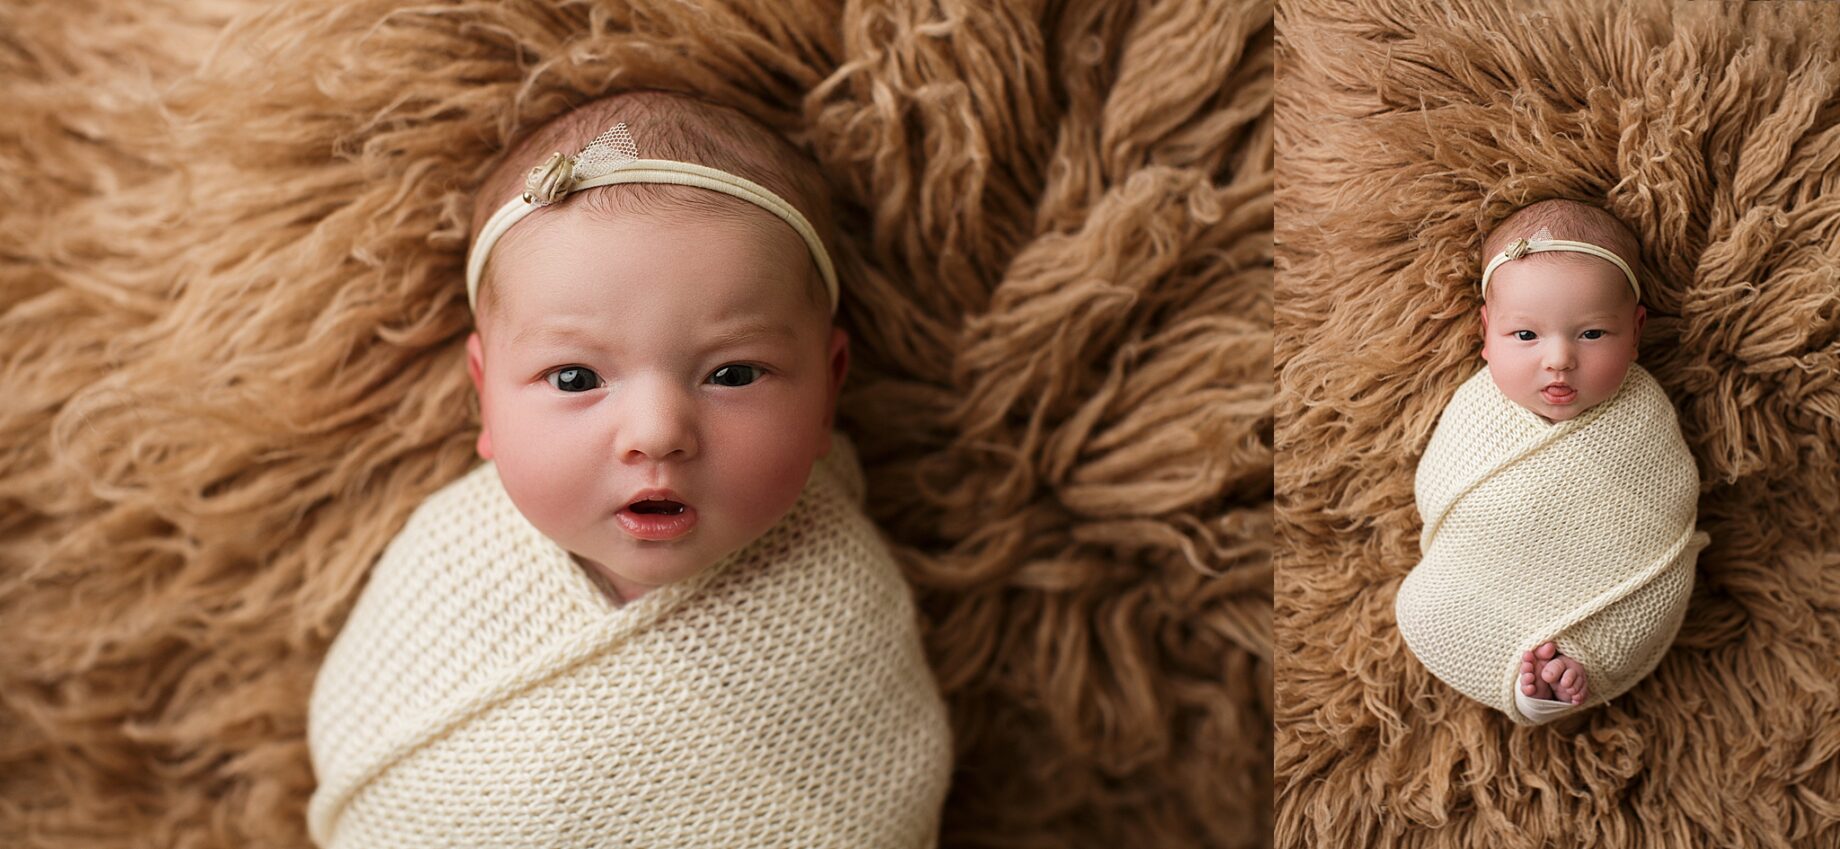 Cape Girardeau newborn photographer, perryville newborn photographer, baby on fuzzy rug, wide awake, flokati, baby girl